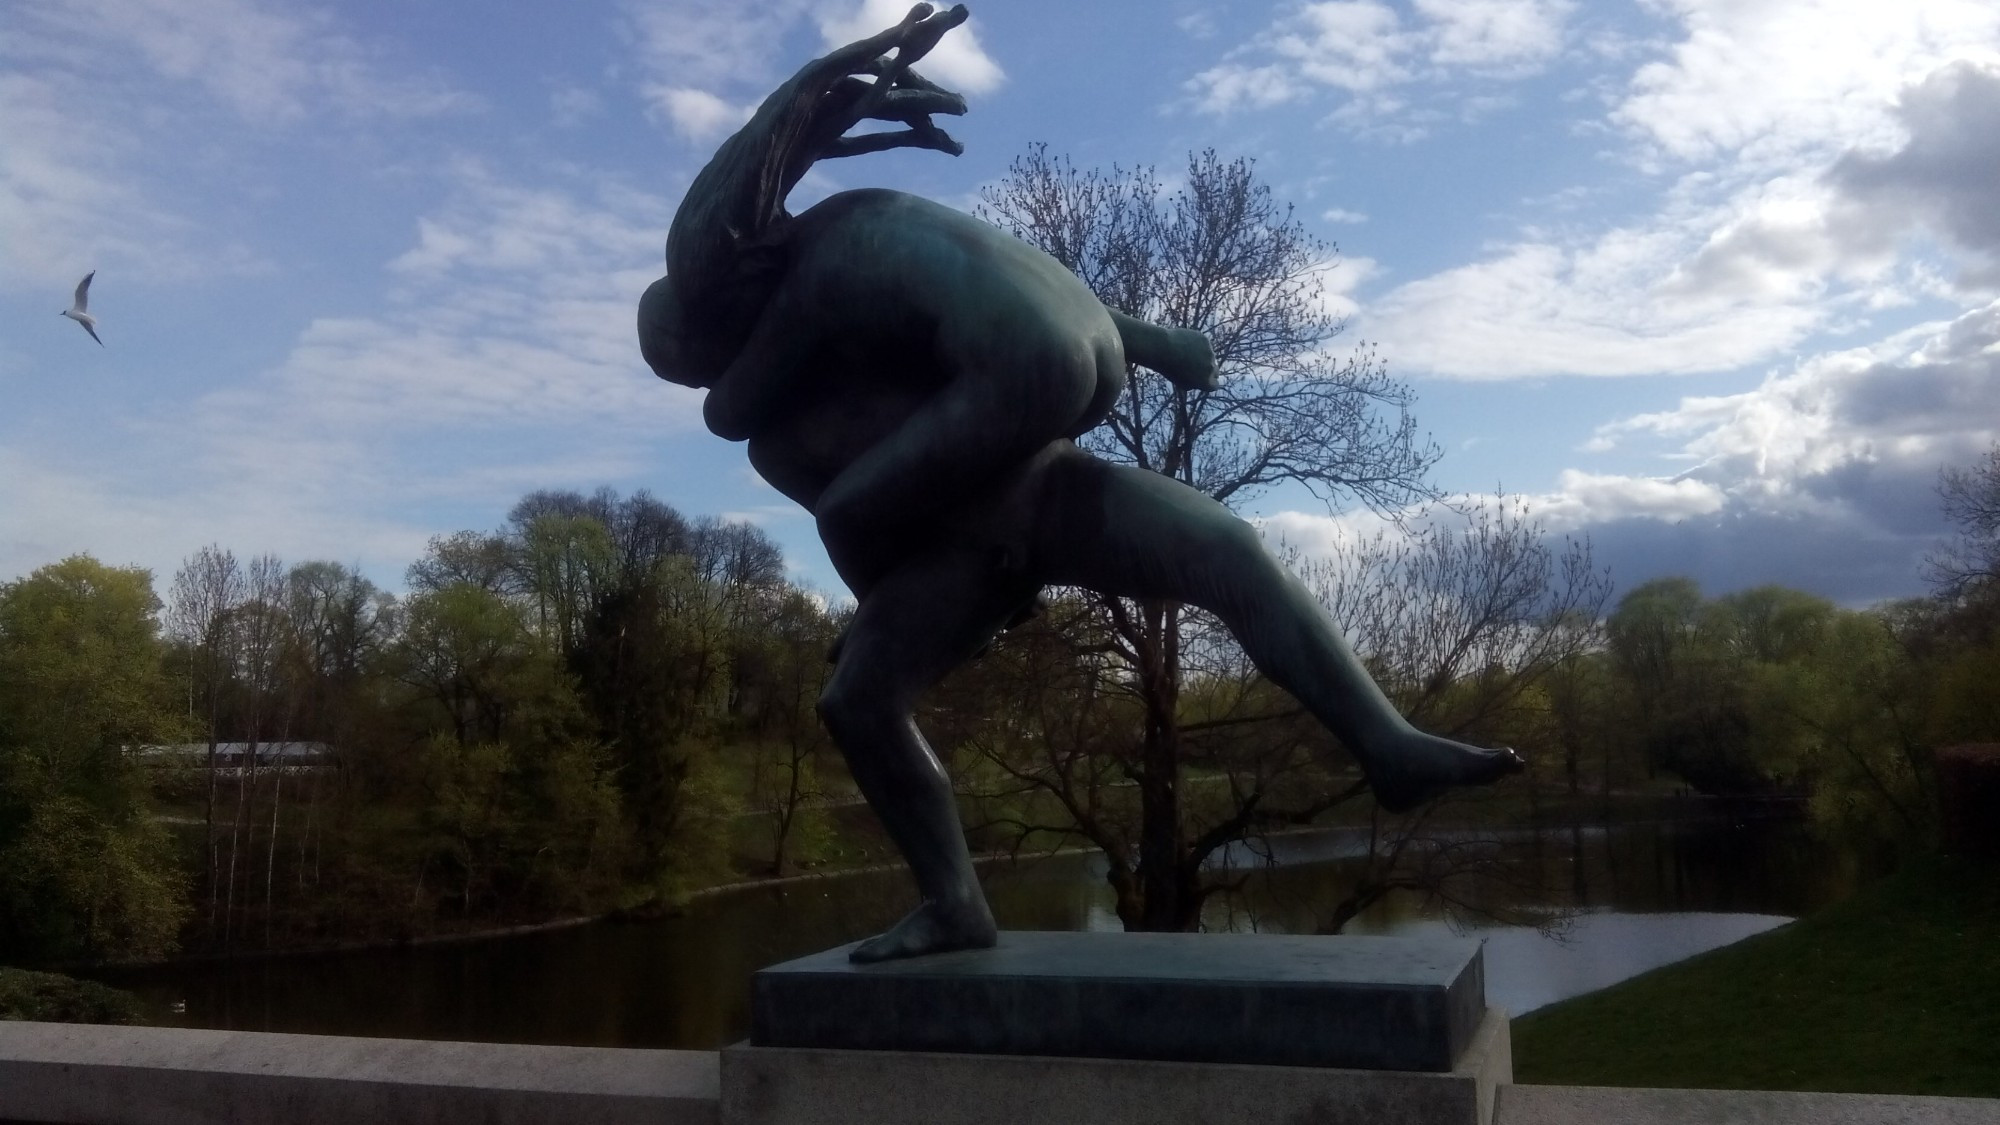 Осло. Скульптурный парк Вигеланна. (02.05.2015)